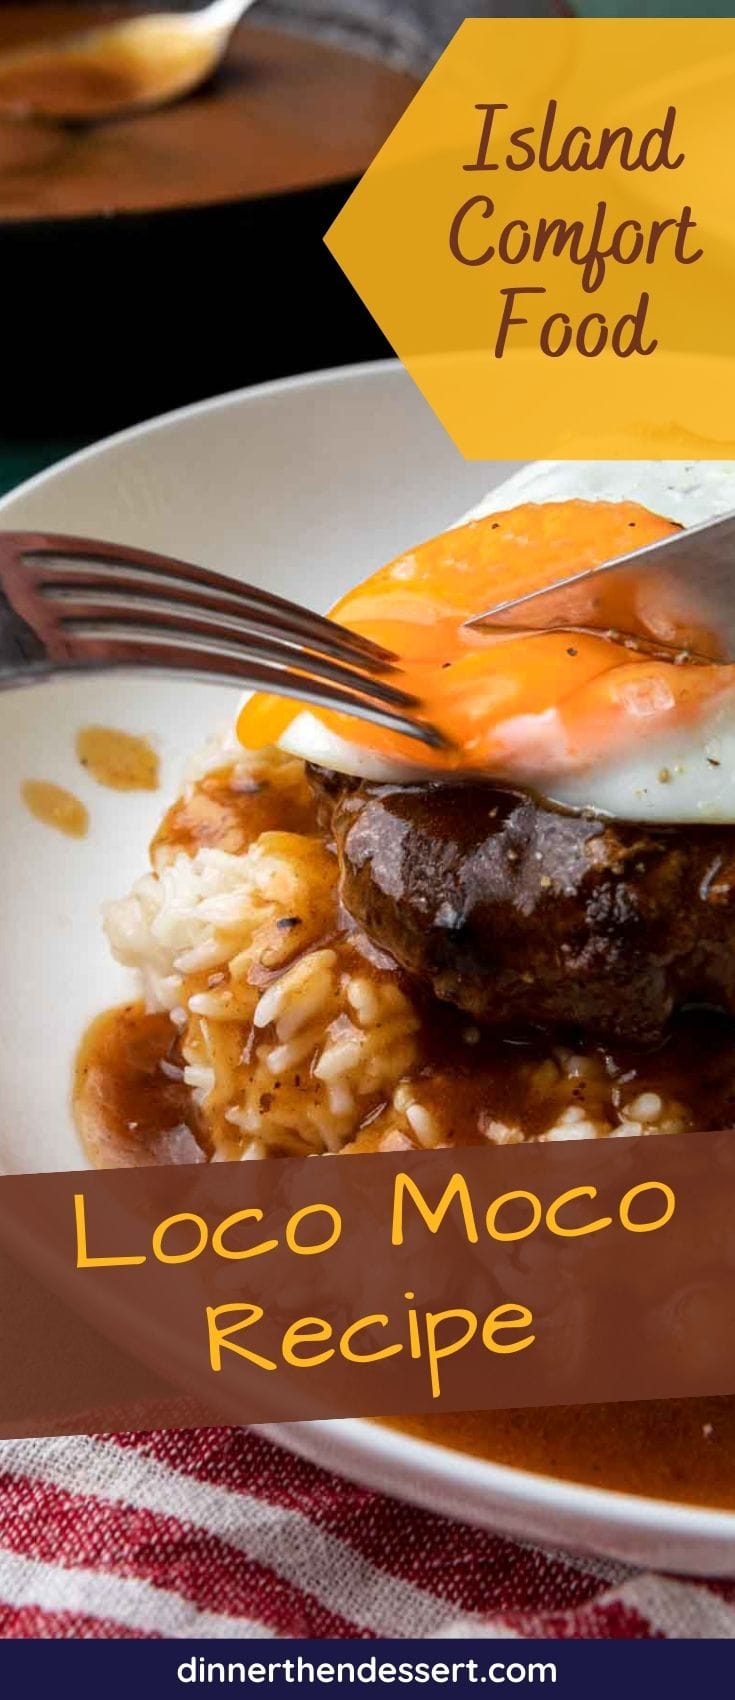 Loco Moco assembled dish on plate, fork and knife cutting egg yolk